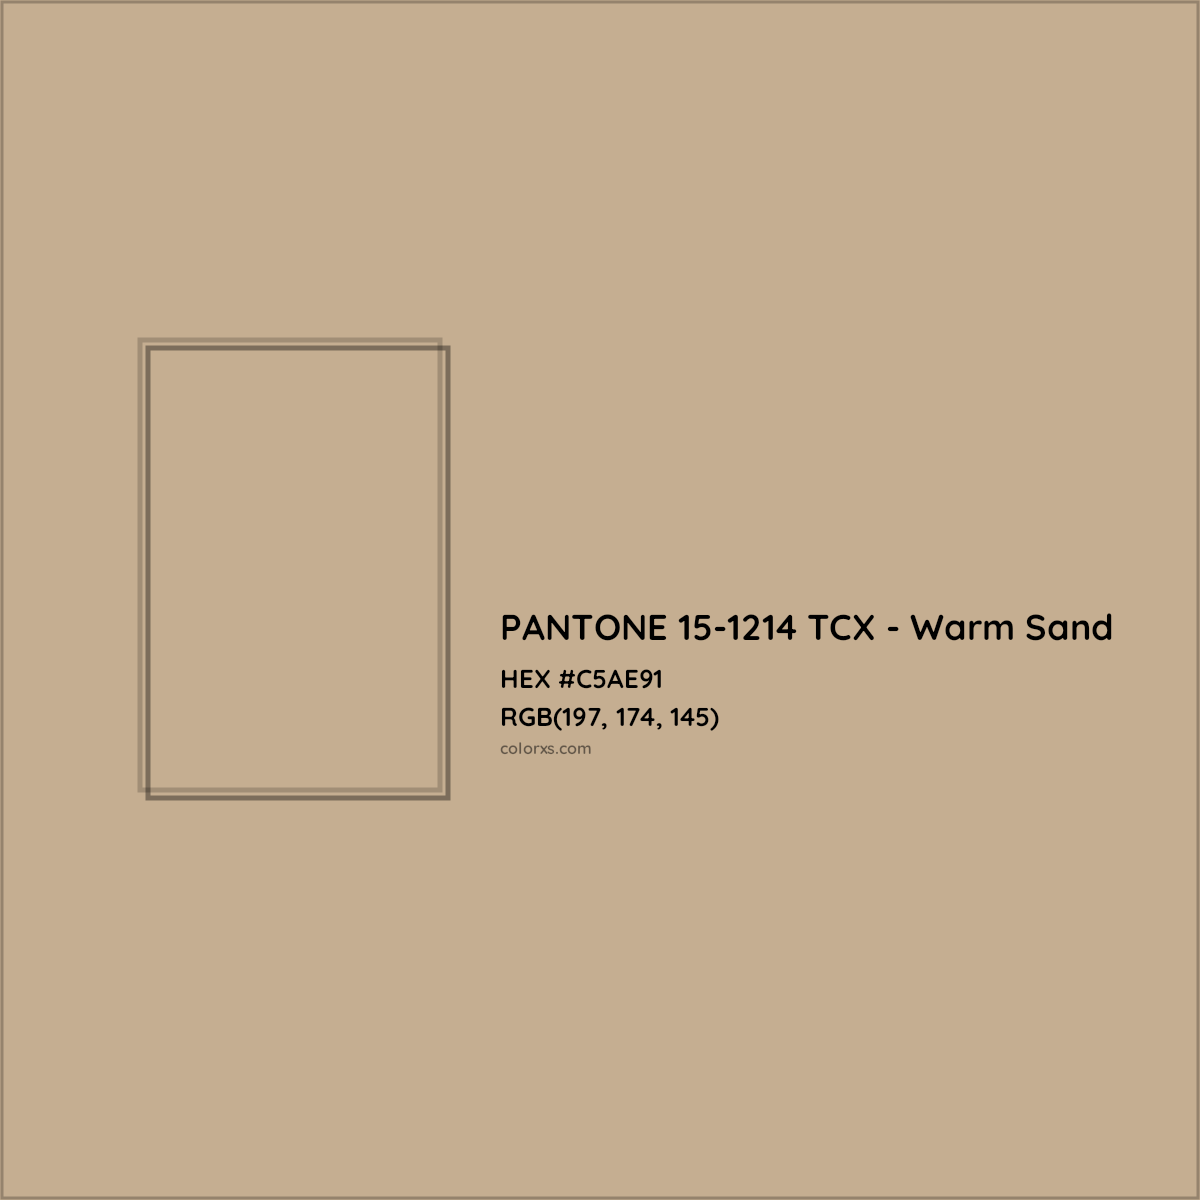 HEX #C5AE91 PANTONE 15-1214 TCX - Warm Sand CMS Pantone TCX - Color Code